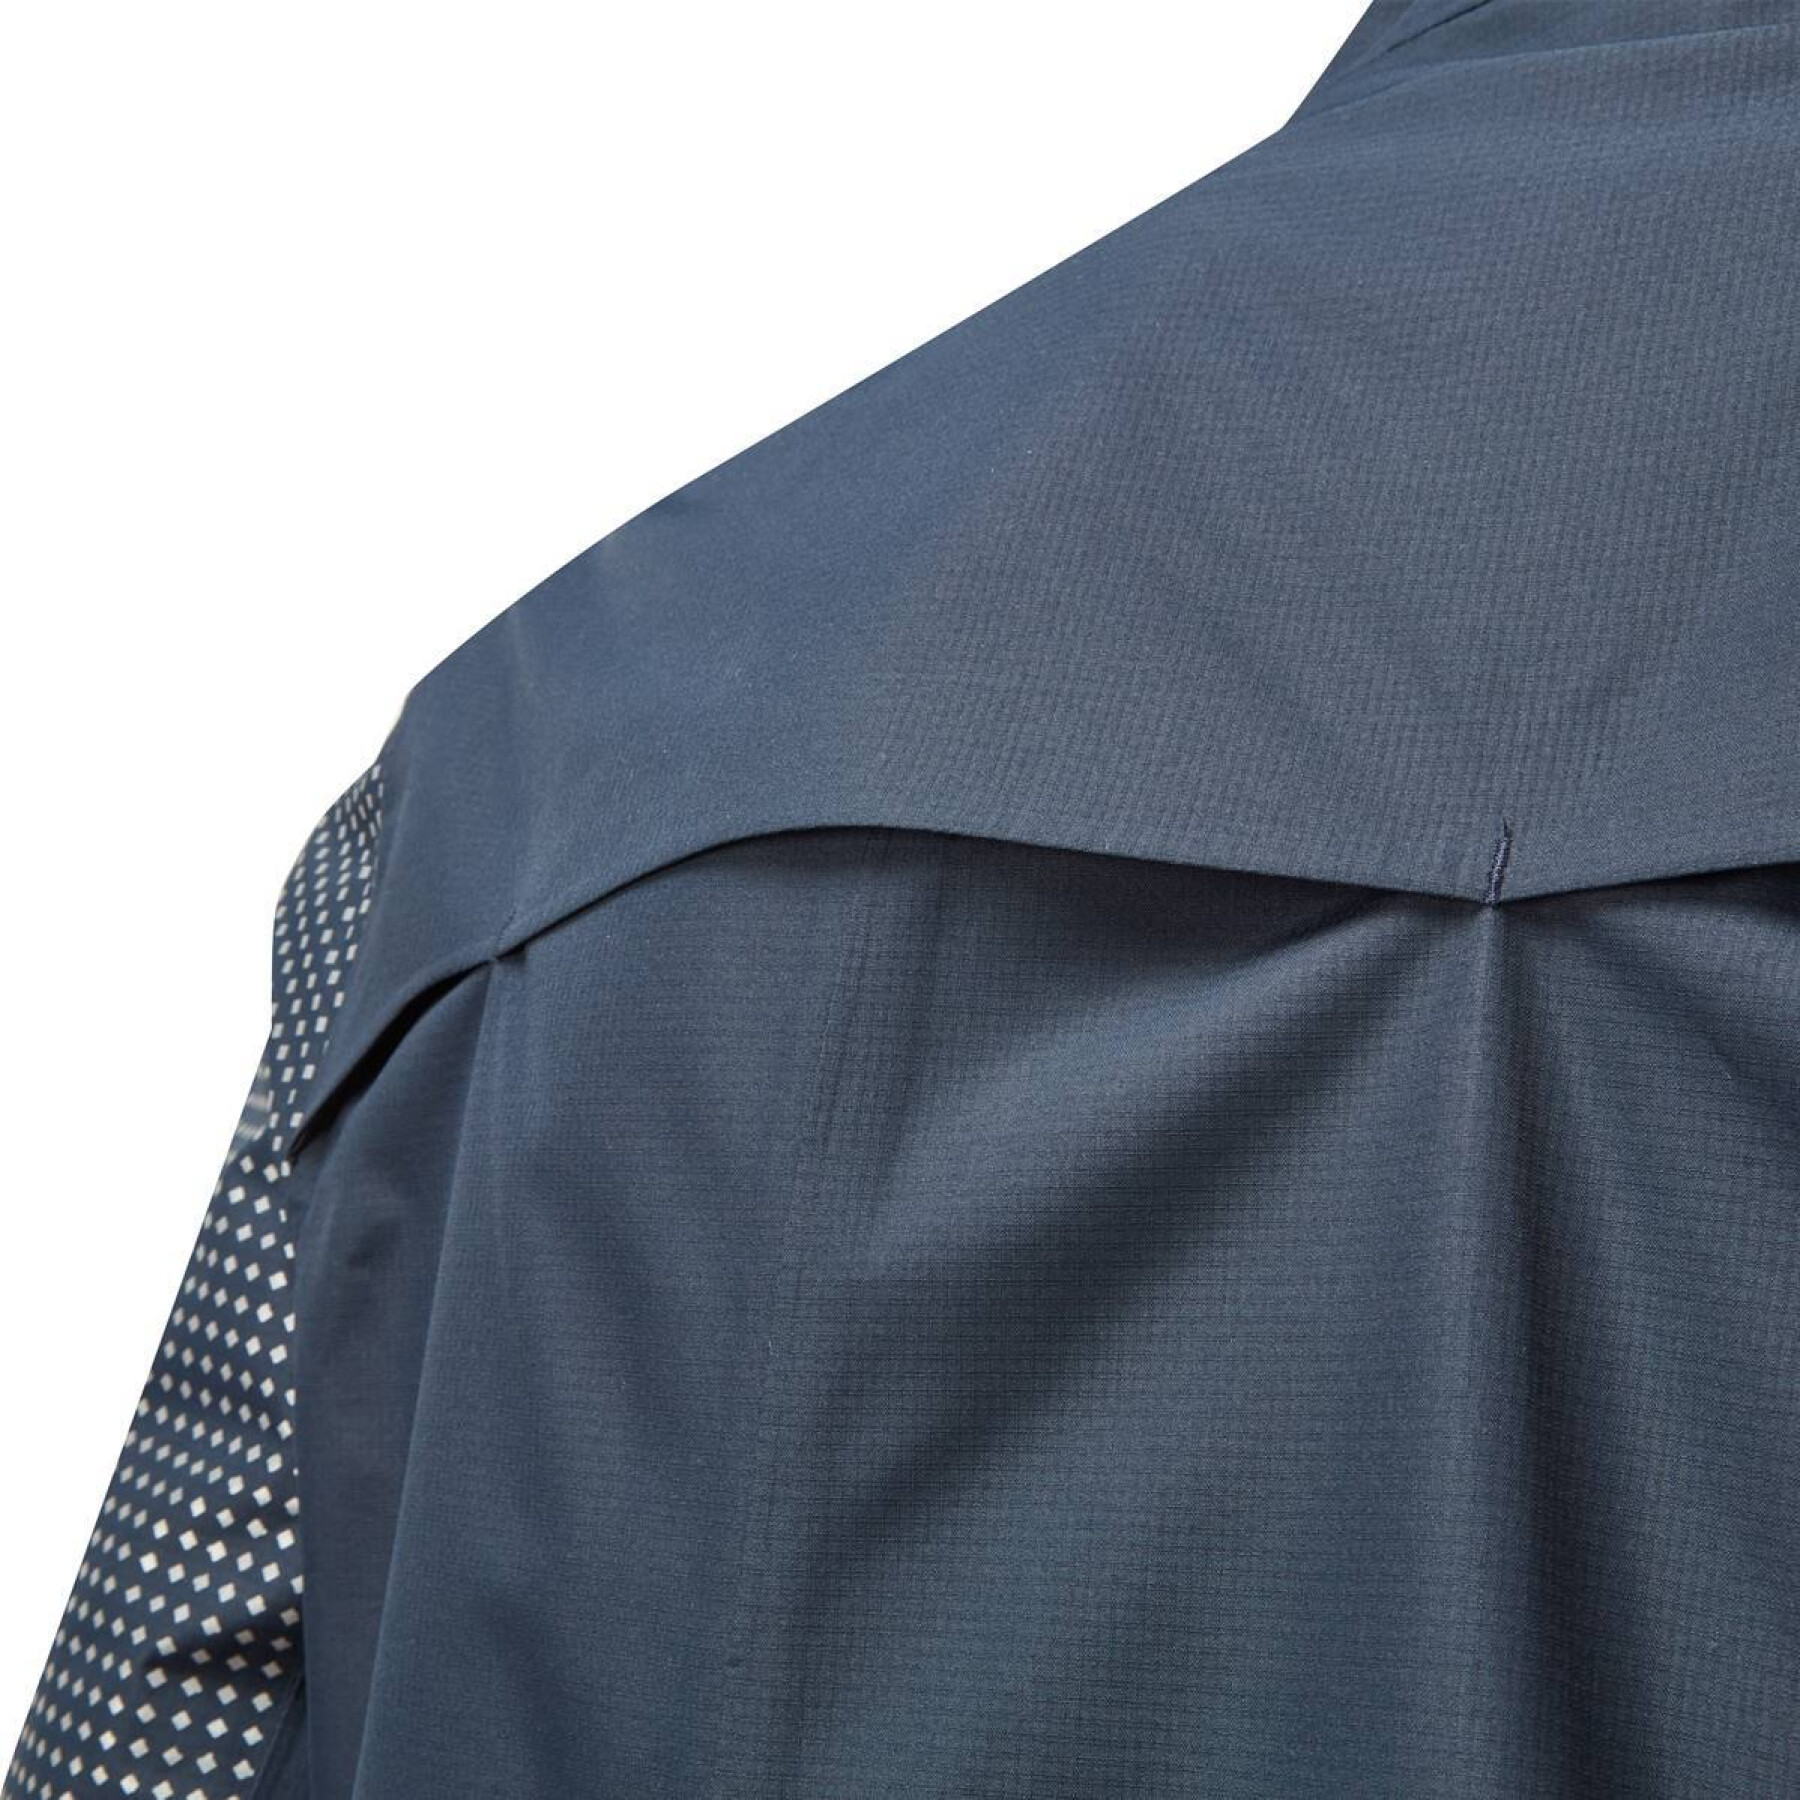 Waterproof jacket Altura Stretch Zephyr Nightvision 2023